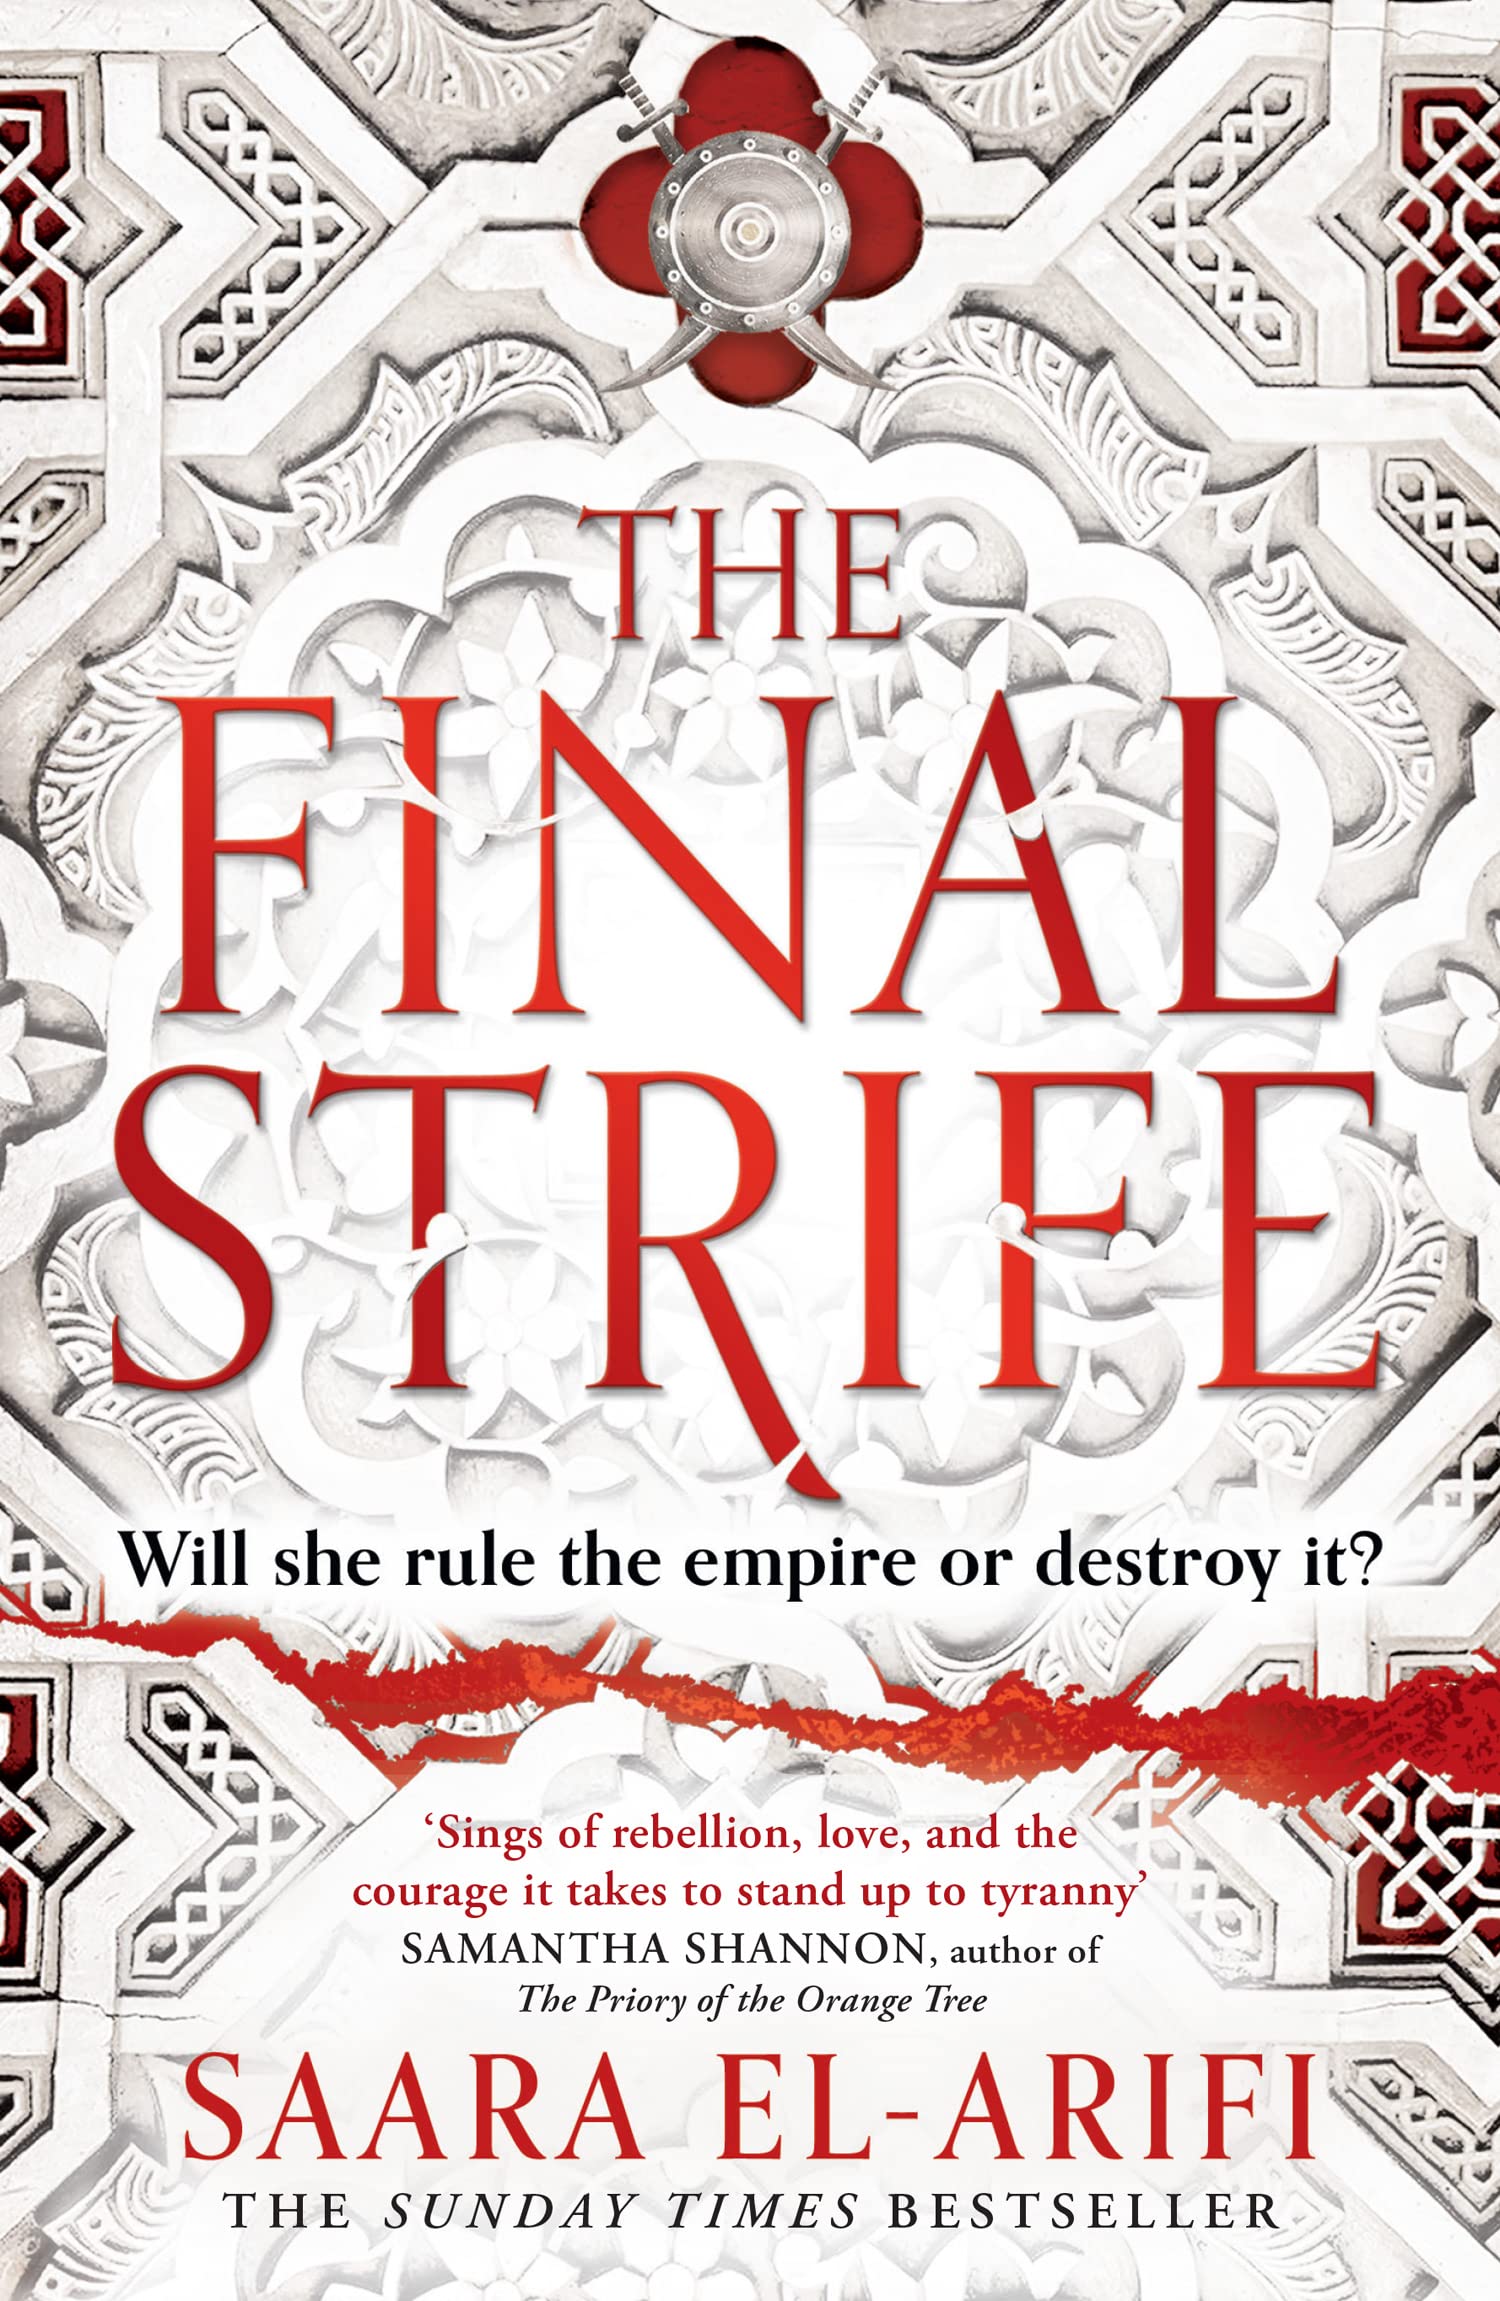 The Final Strife | Saara El-Arifi